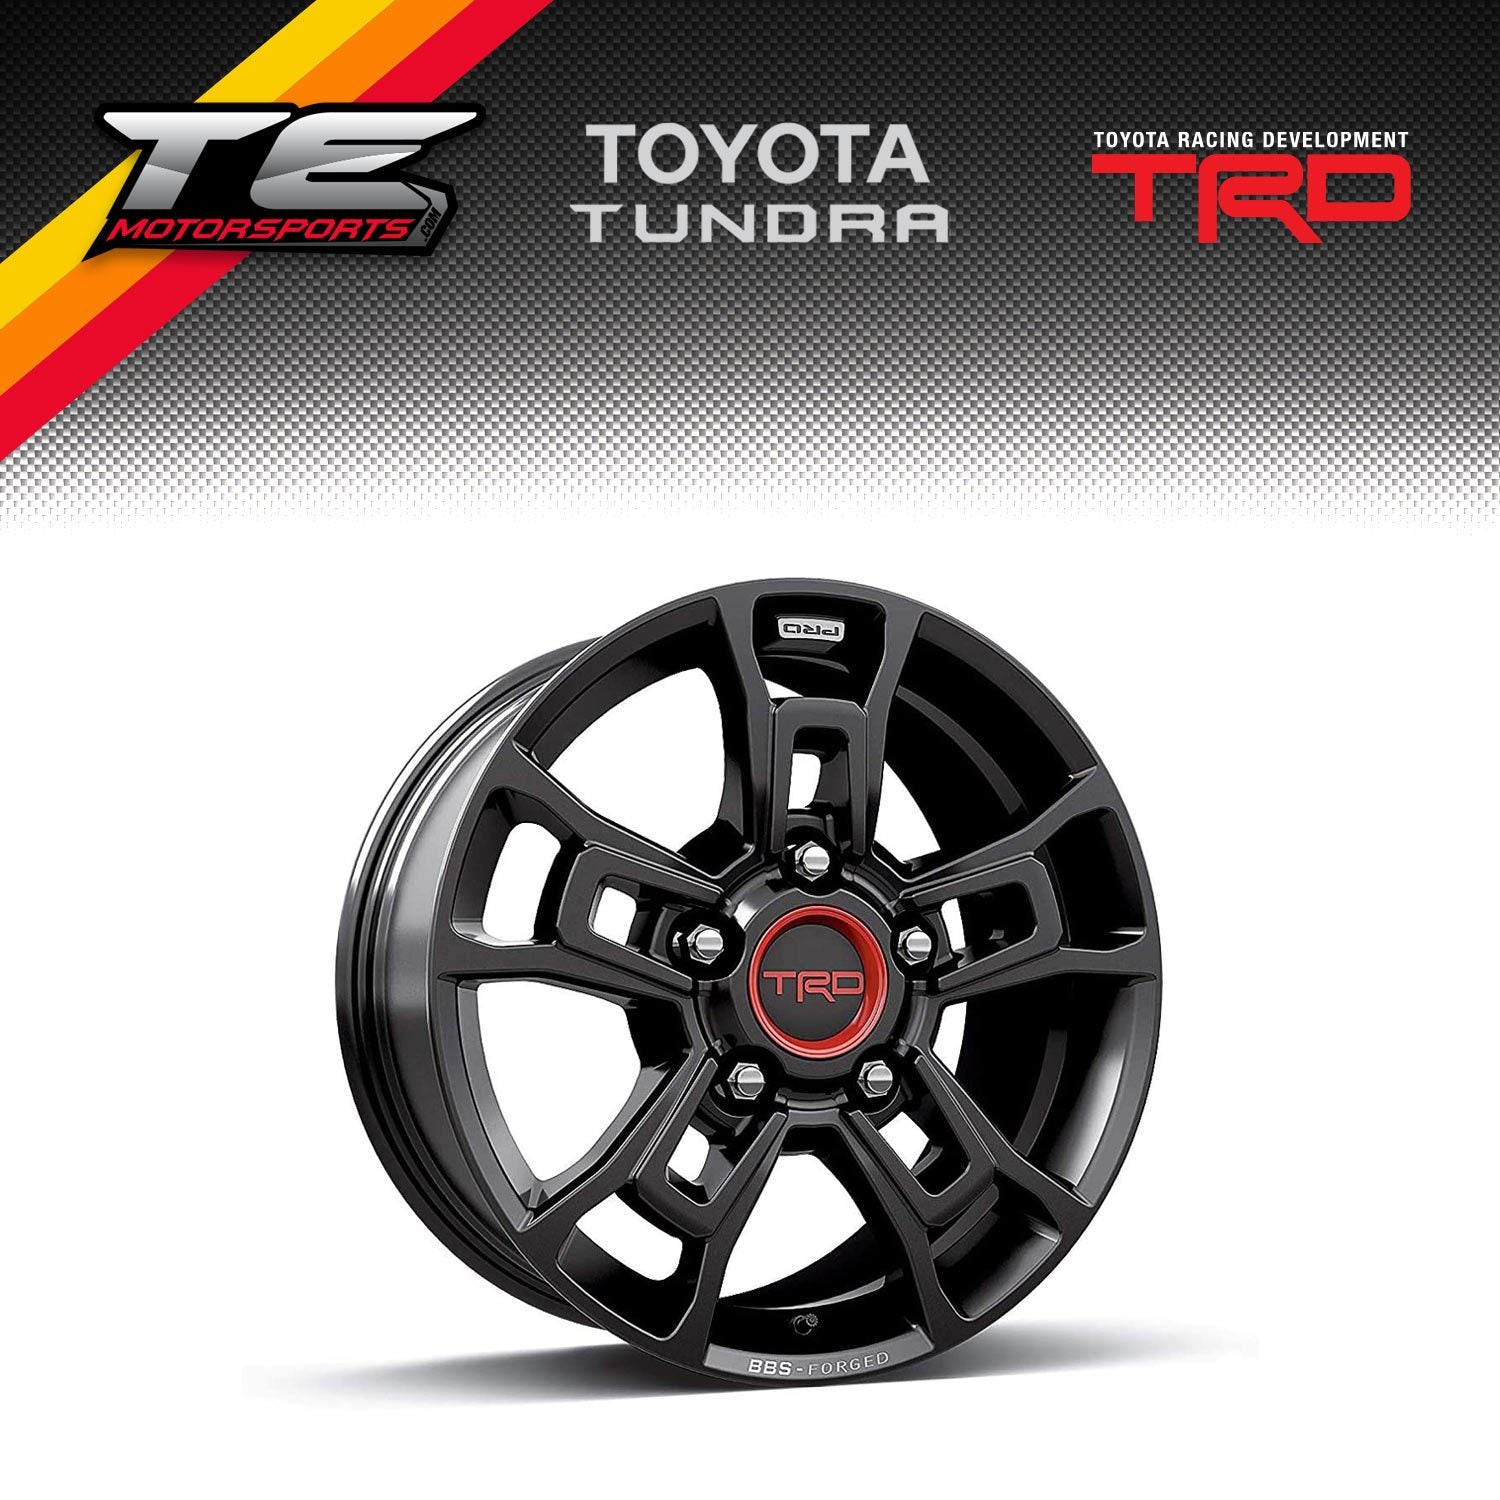 18" Wheel, TRD, Matte Black Forged Aluminum - Toyota (PT960-34200-02)Tundra